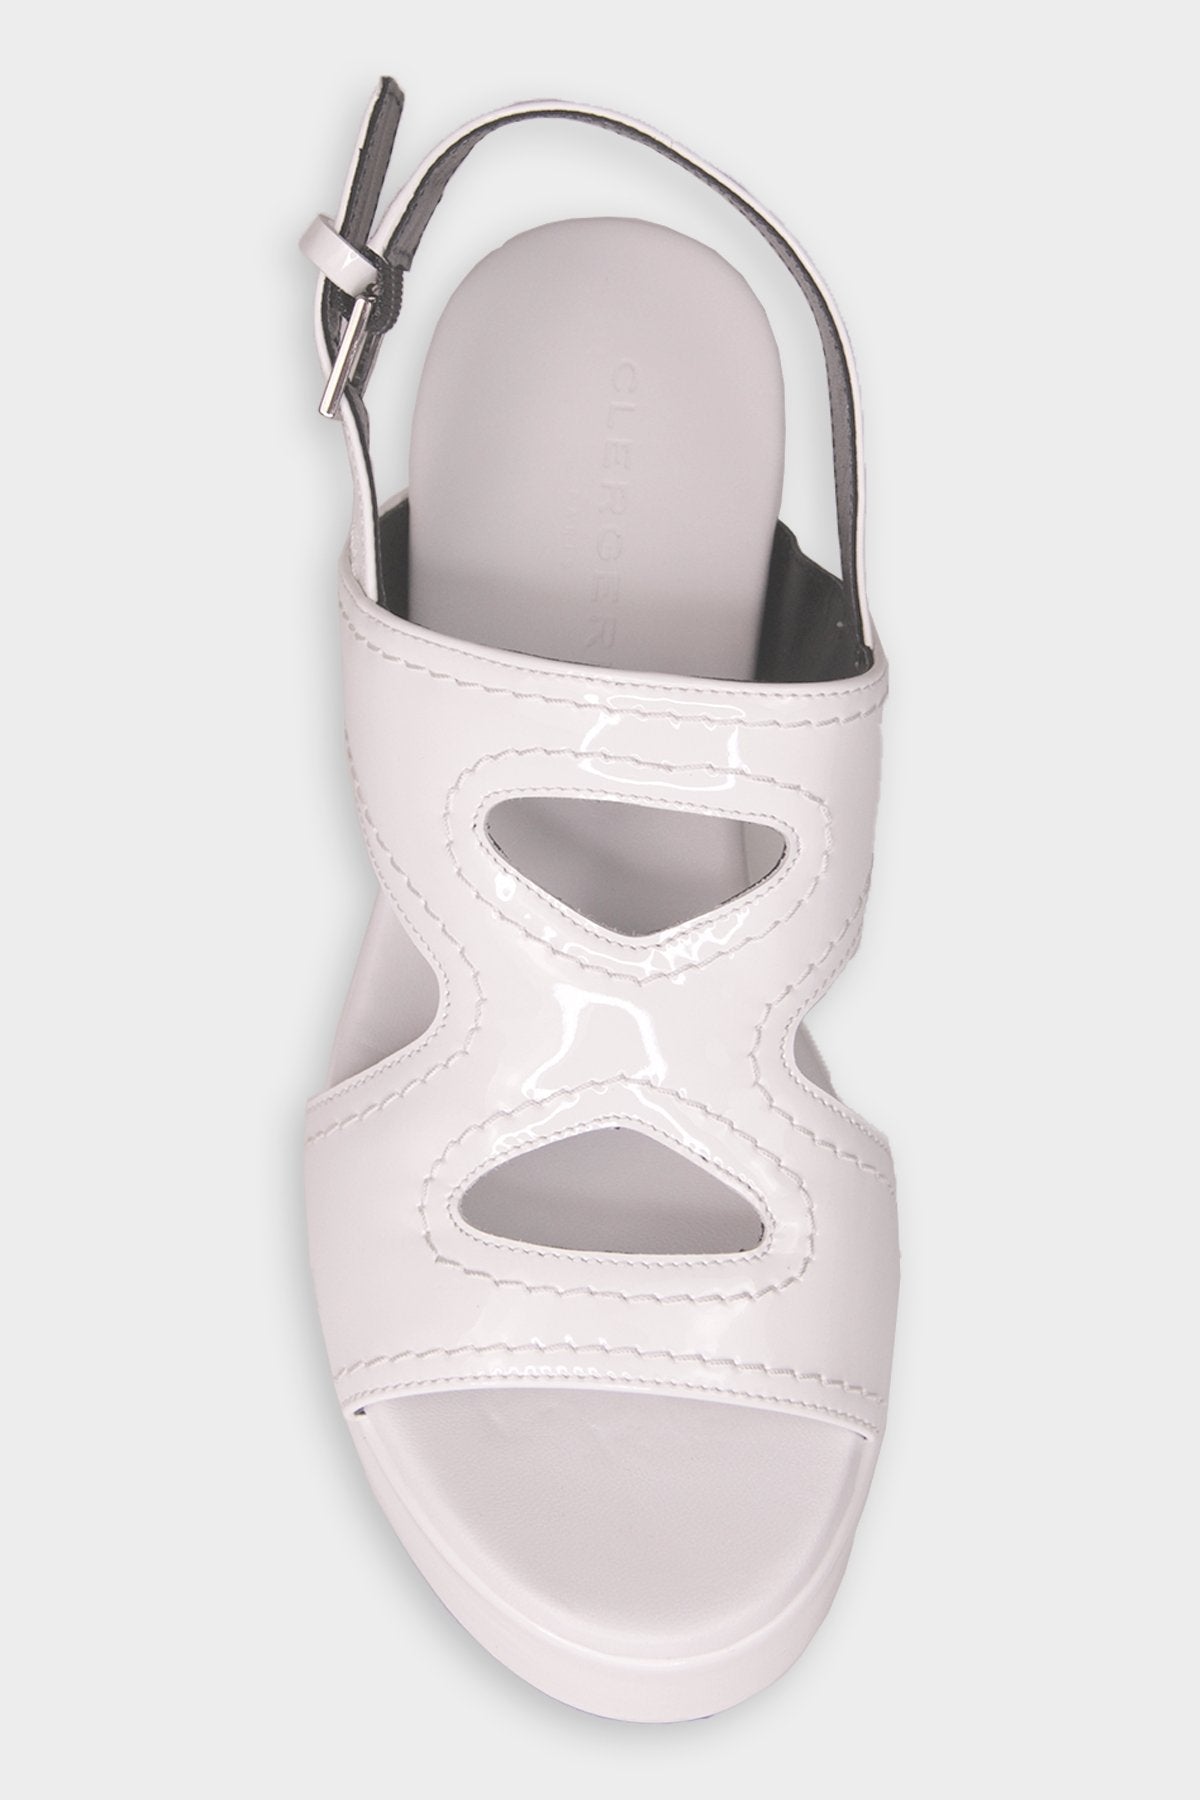 Clint Slingback Platform Sandals in White Patent - shop-olivia.com